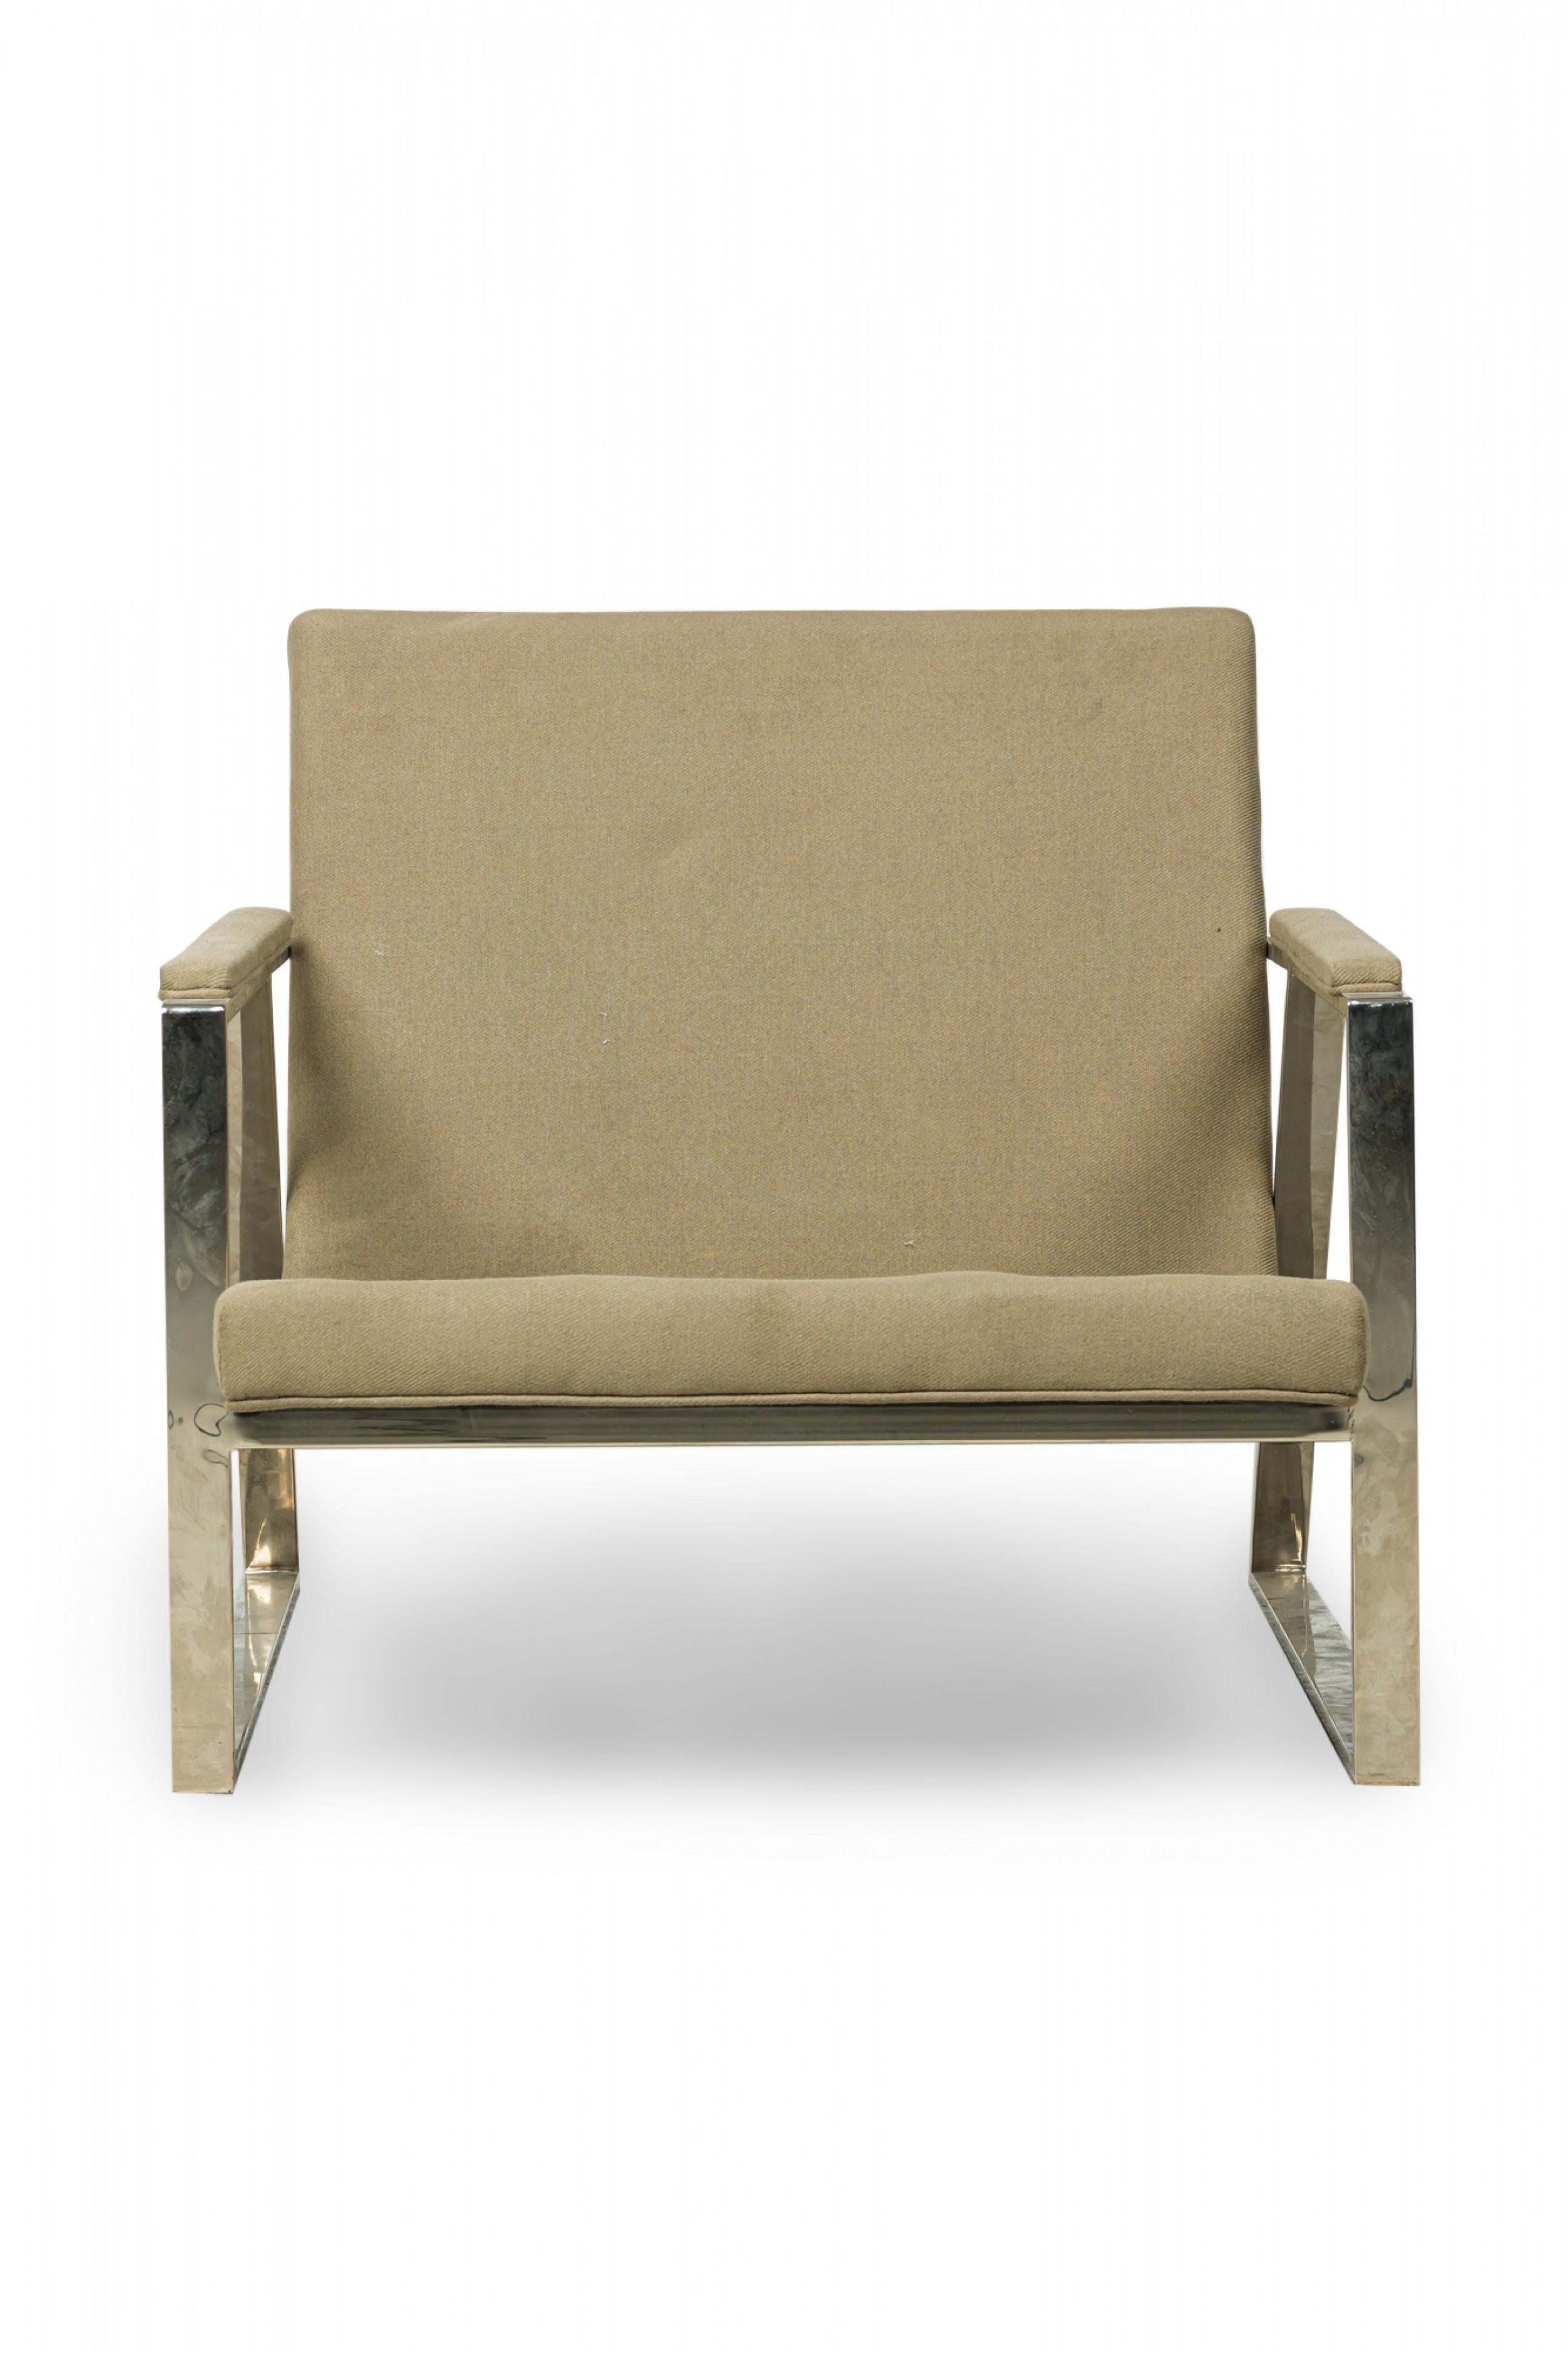 Mid-Century Modern Milo Baughman American Beige Upholstered Flat Chrome Bar Lounge Armchair For Sale